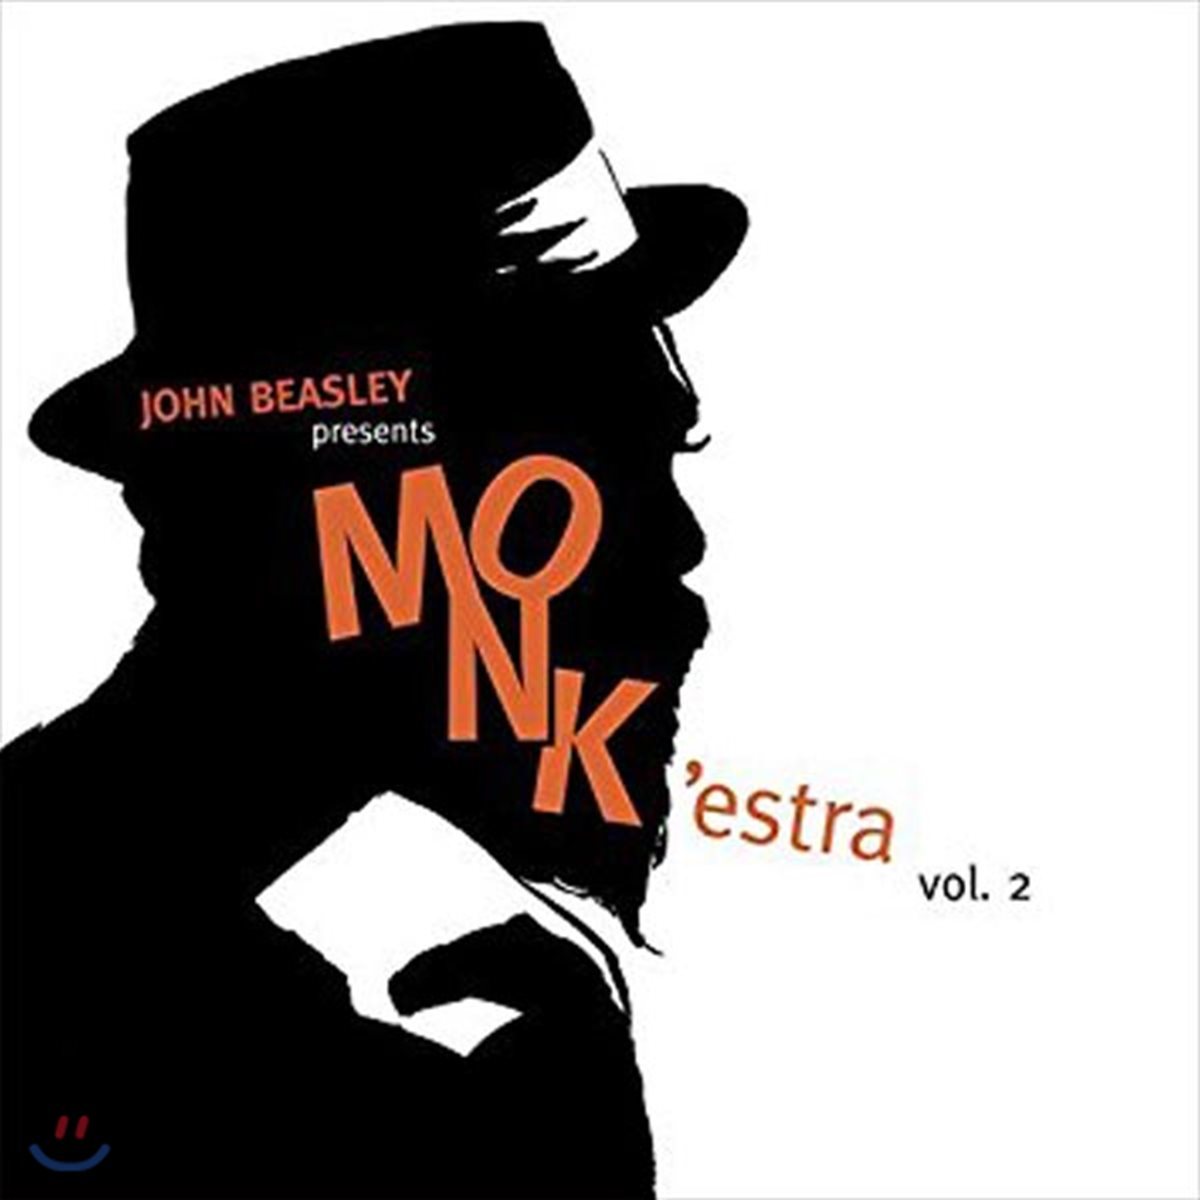 John Beasley (존 비즐리) - Presents MONK'estra vol. 2